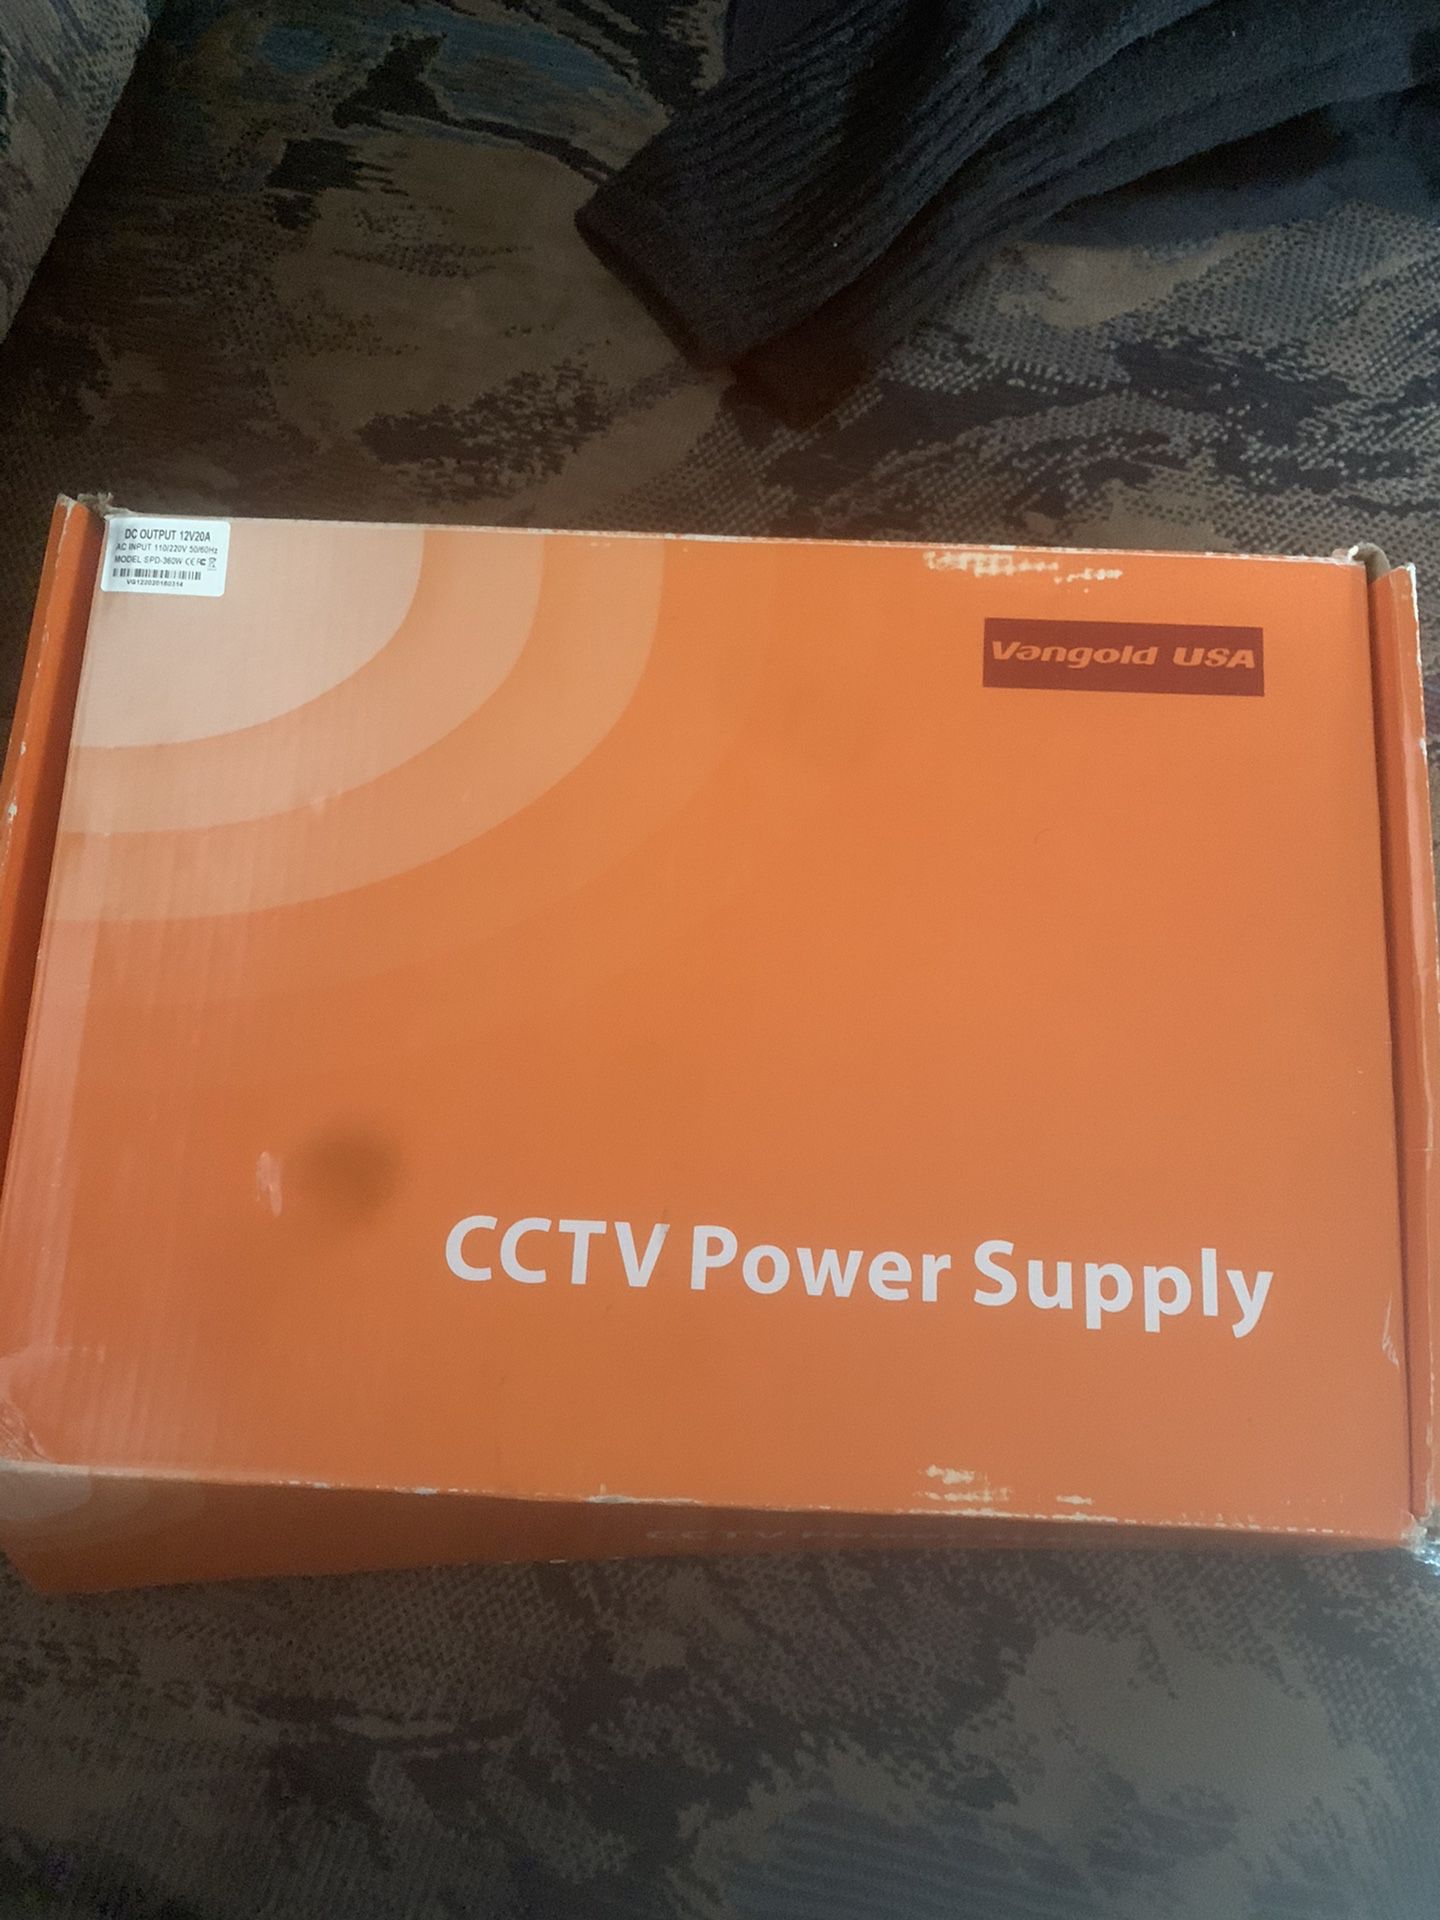 CCTV power supply Vangold USA